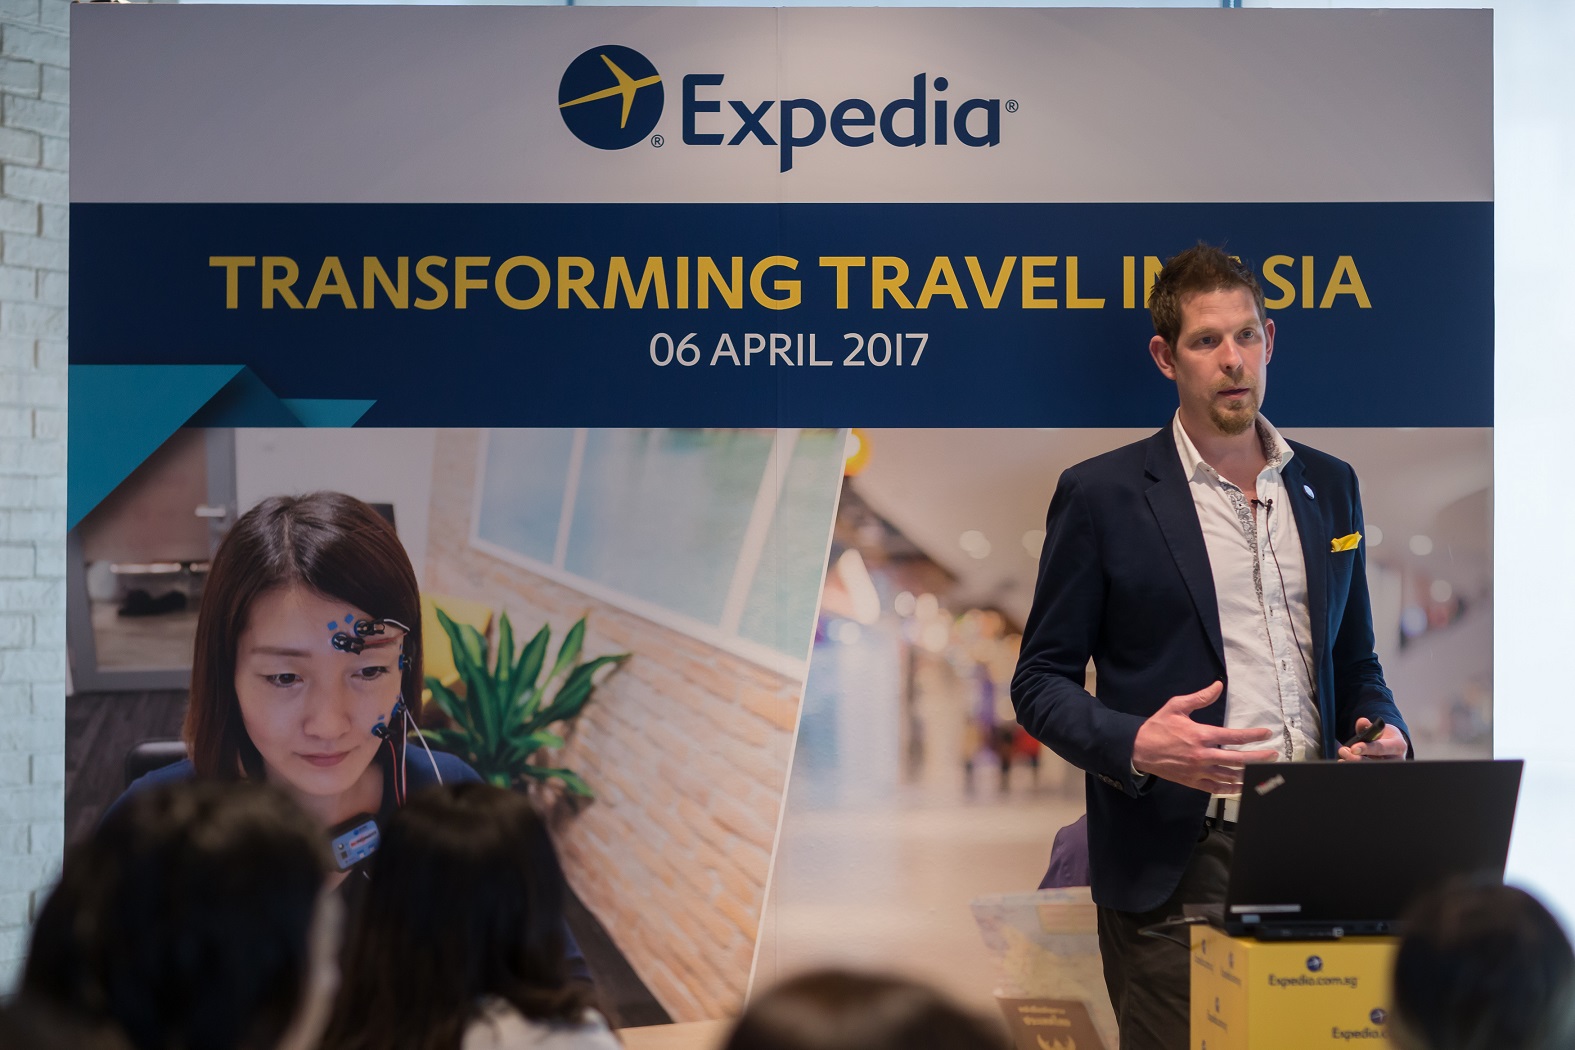 Expedia transforms travel through technology